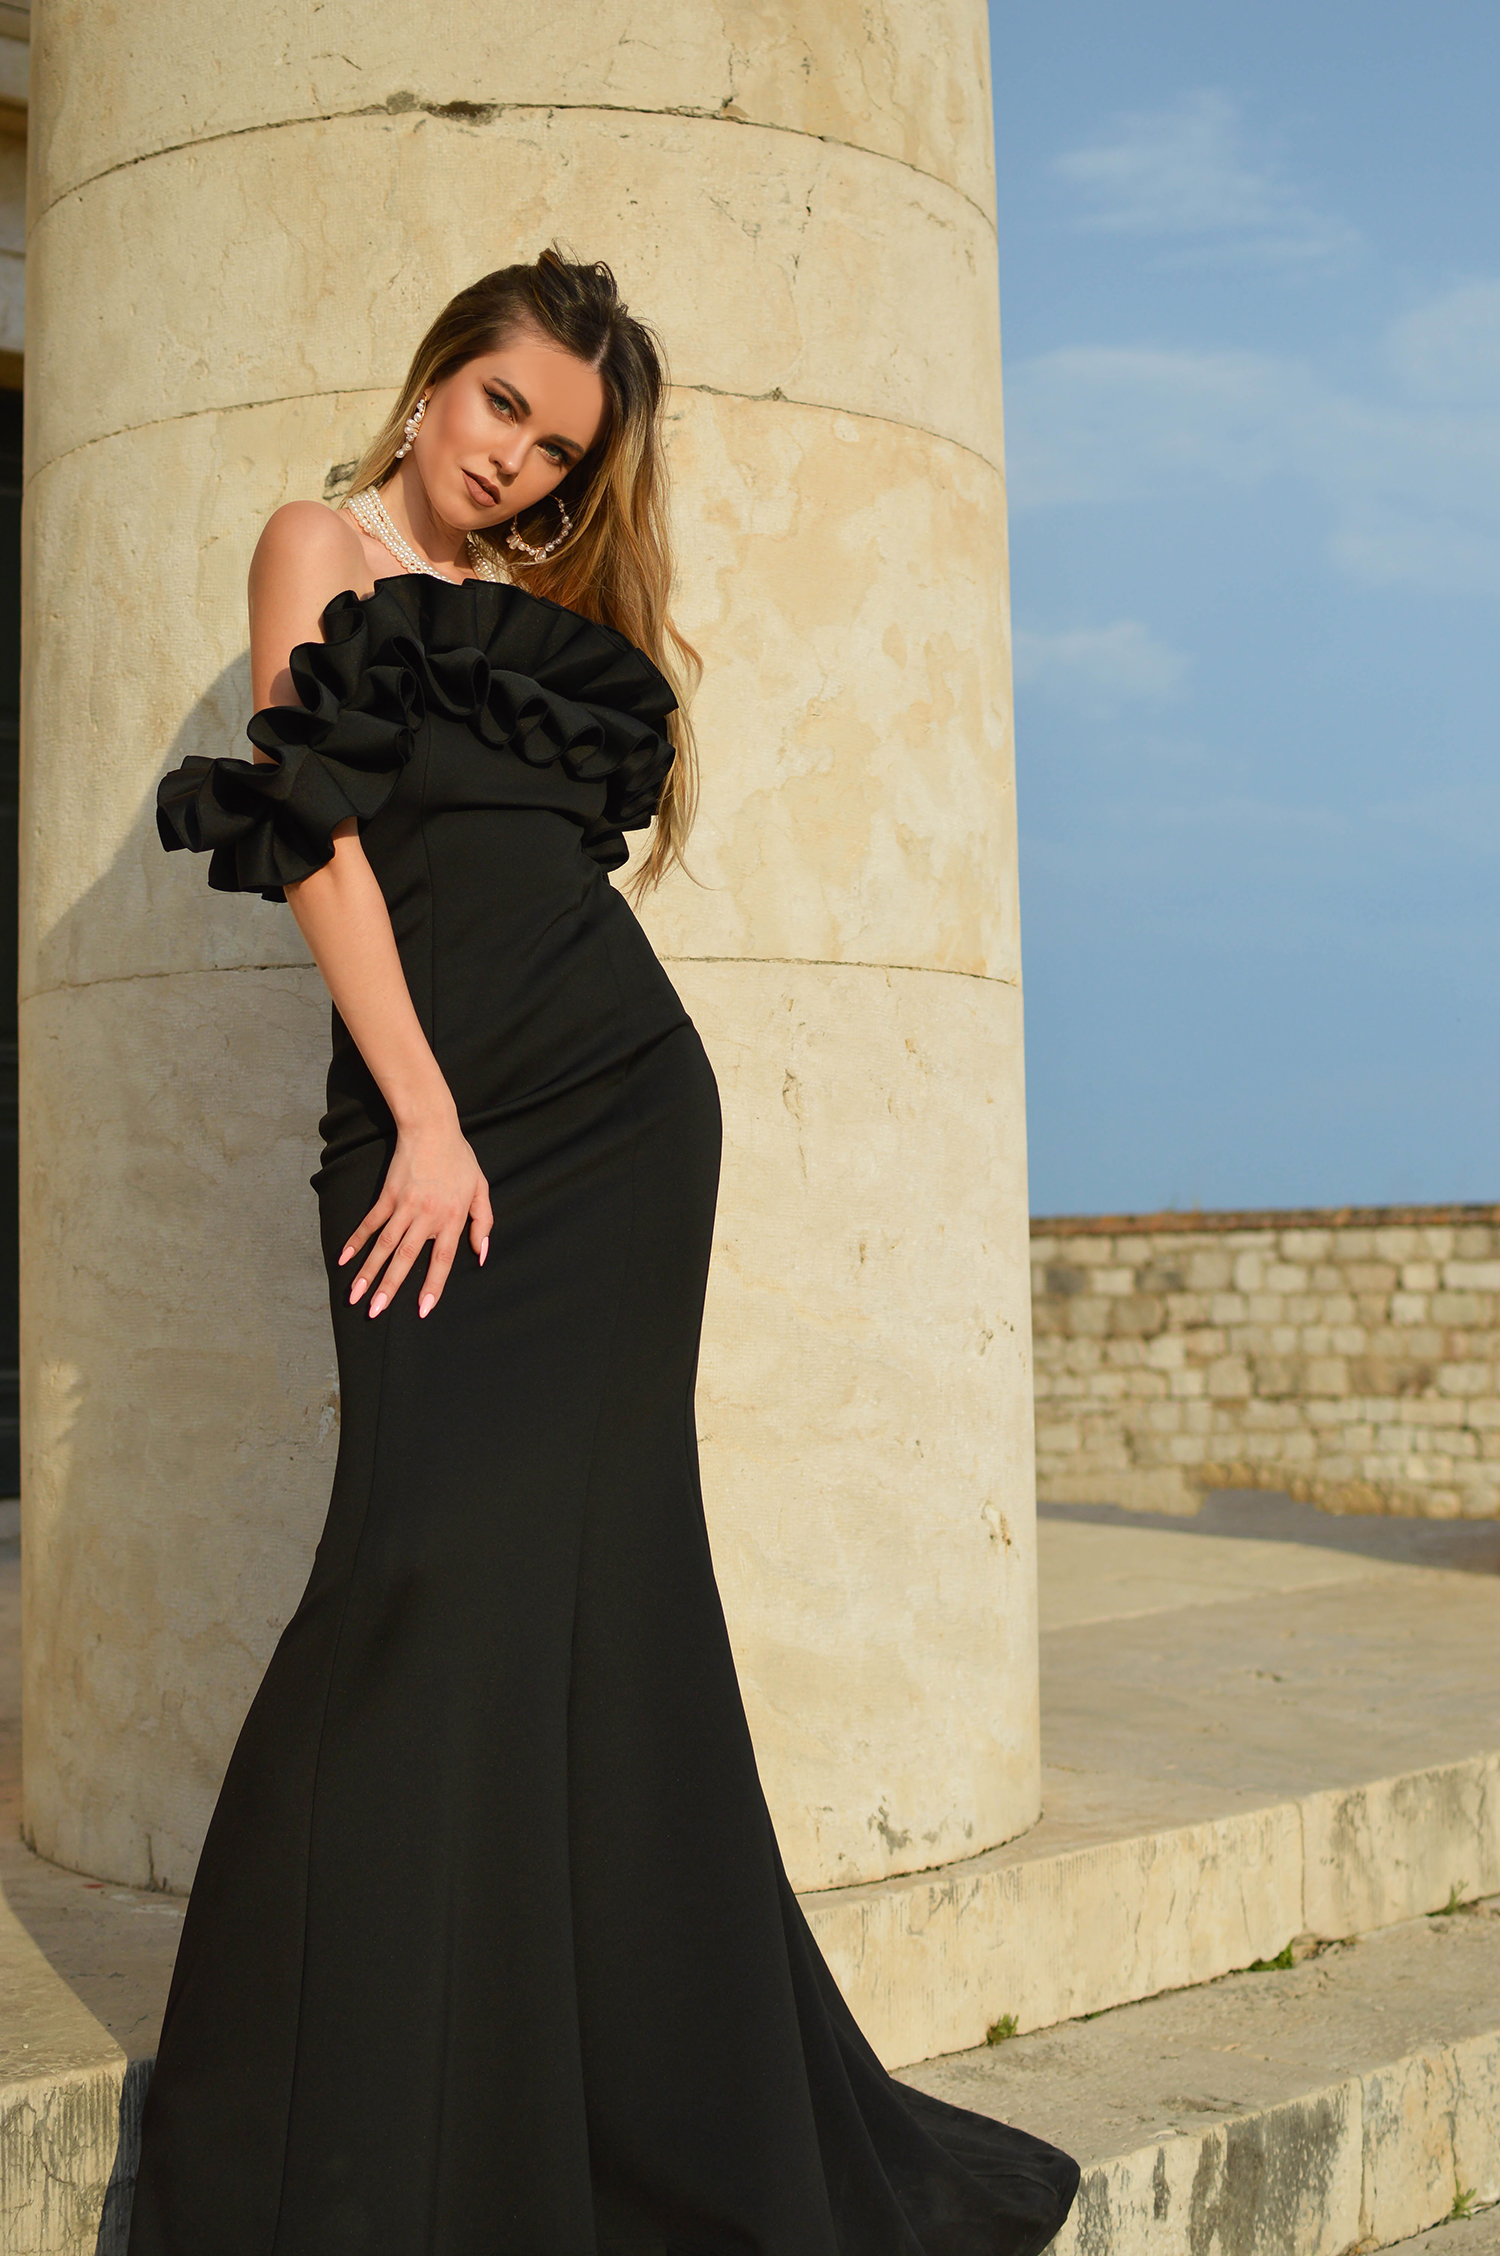 Sexy Bodycon Black Dress by Tamara Bellis